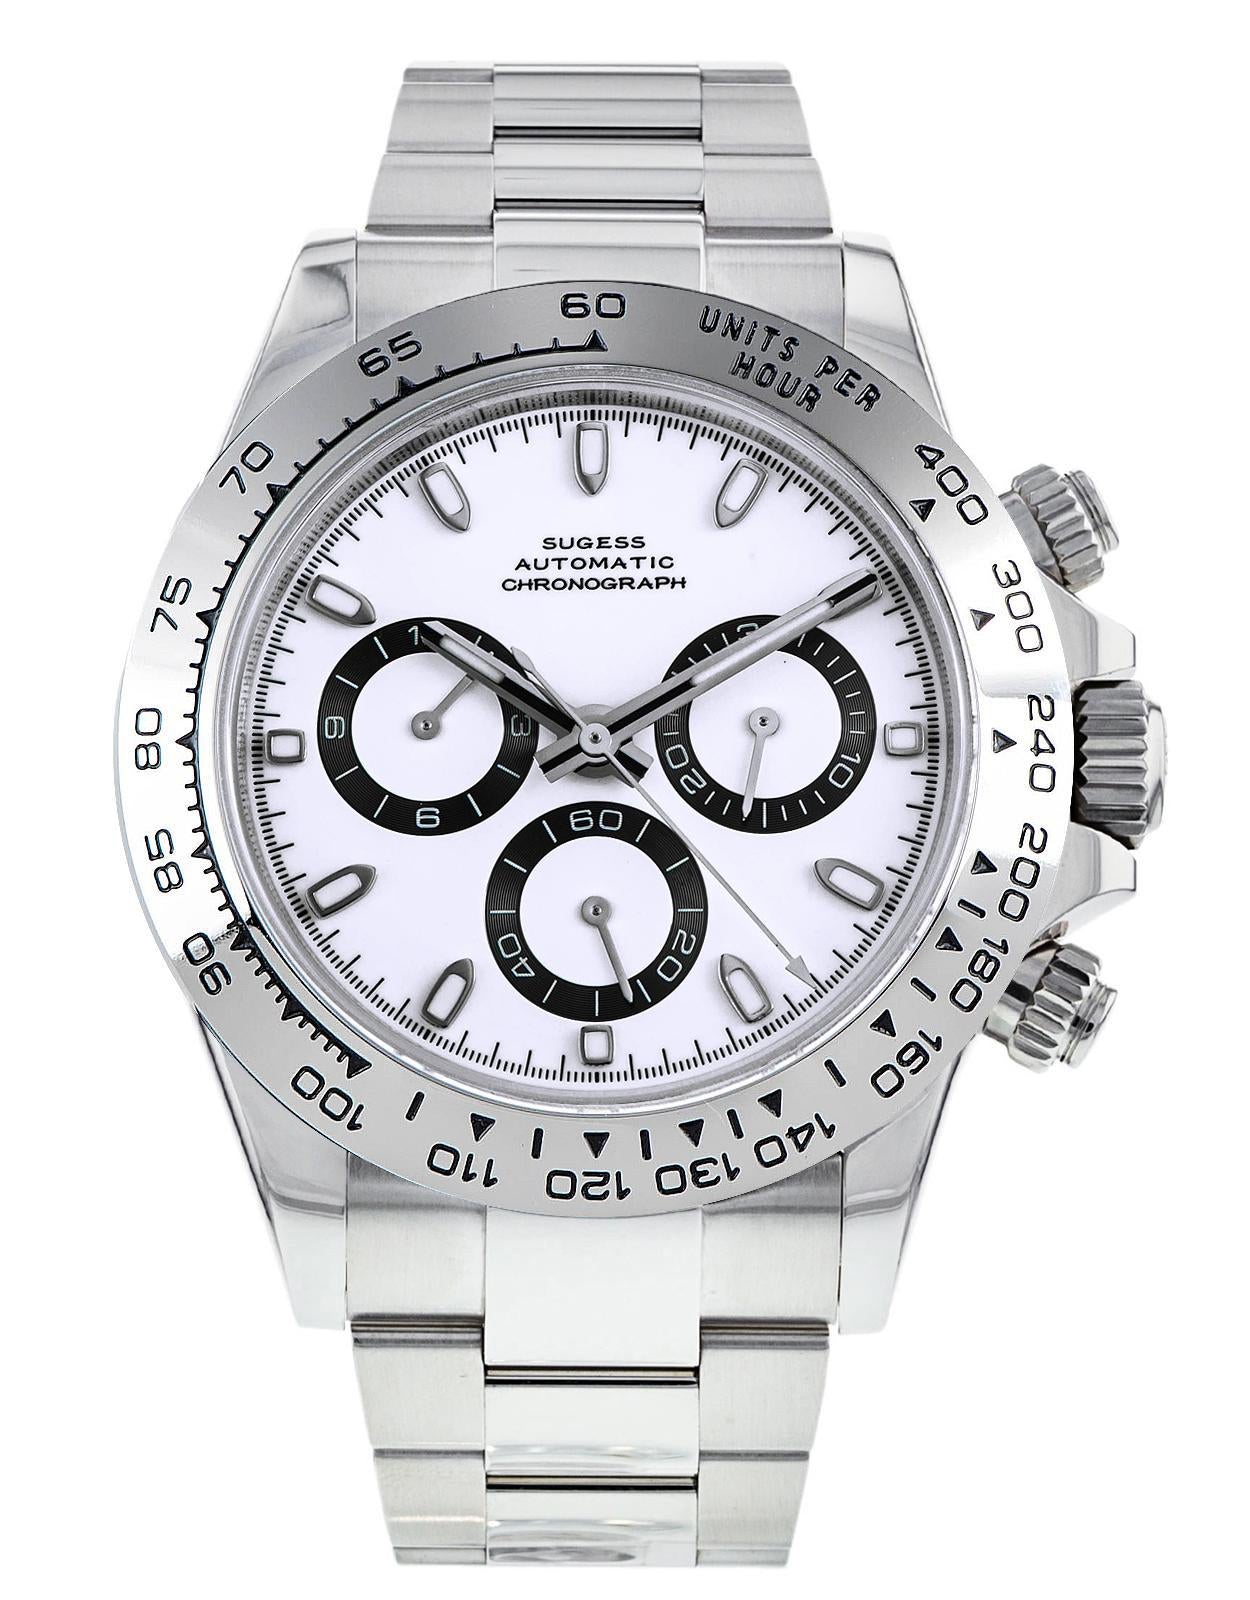 Sugess Top Chronometer Daytona SU002DAY Panda Dial Automatic Chronograph Watch ETA7750